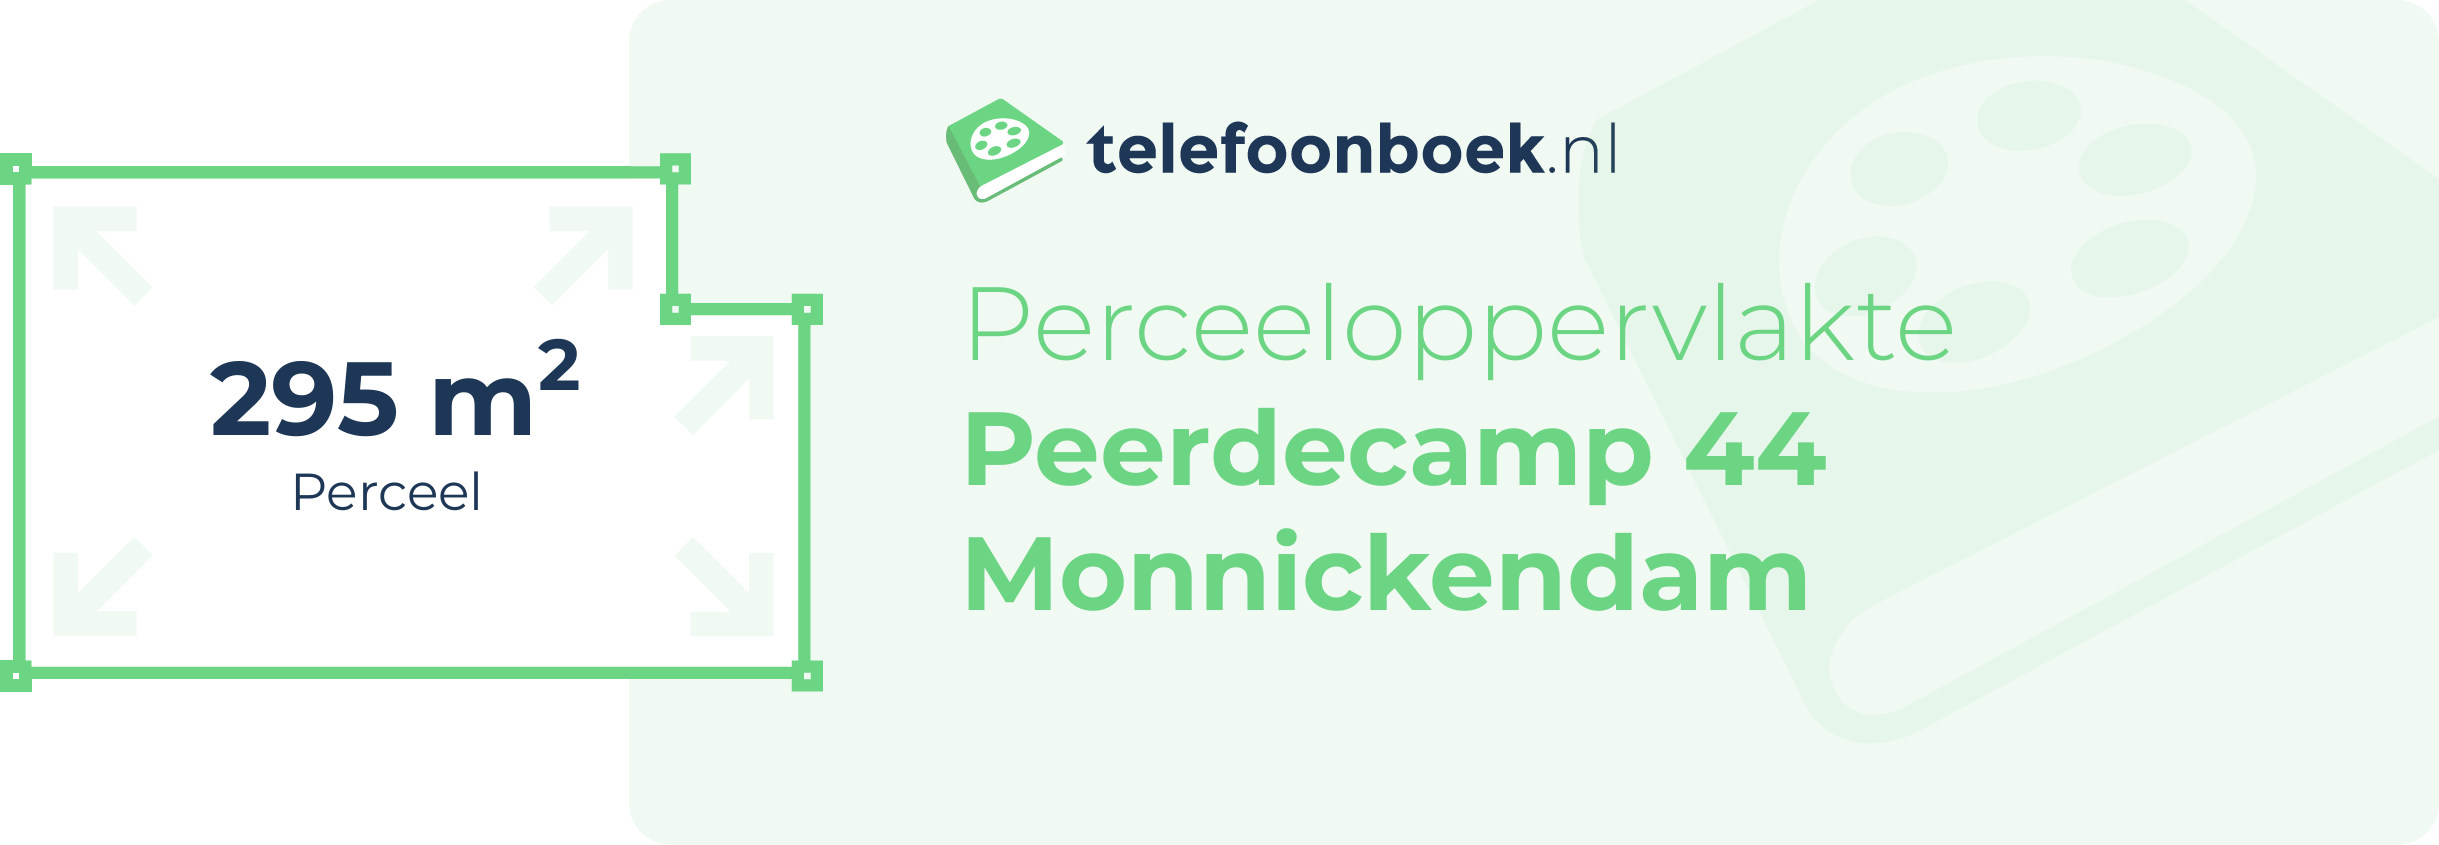 Perceeloppervlakte Peerdecamp 44 Monnickendam